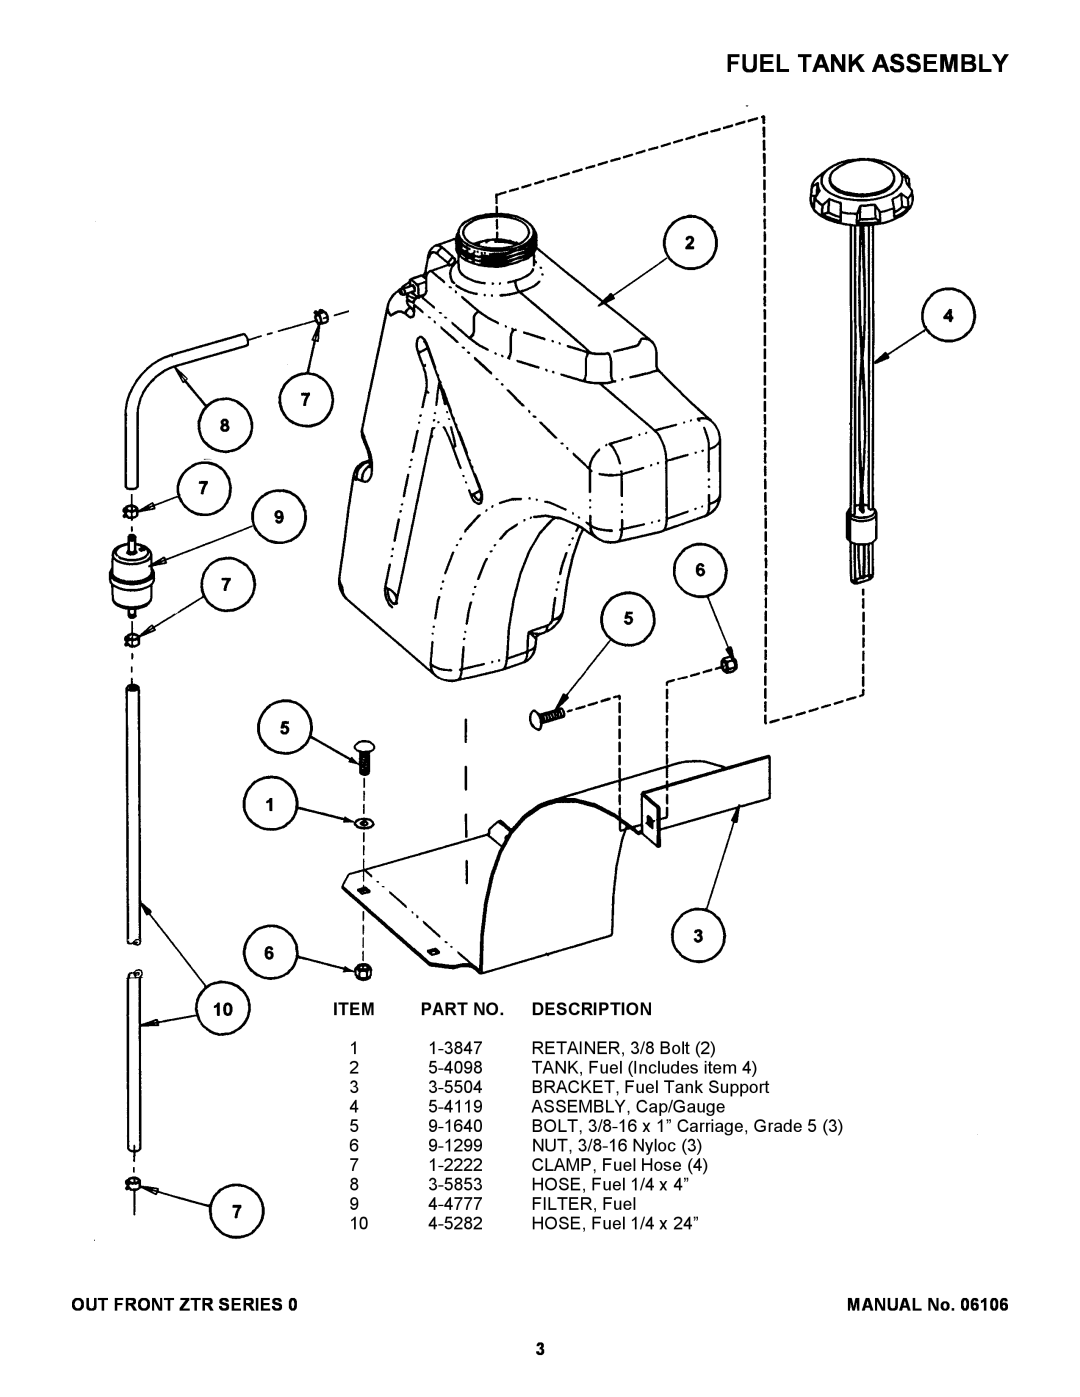 Snapper ZF2500KH, ZF2200K manual Fuel Tank Assembly, Part No. Description, Out Front Ztr Series, MANUAL No 